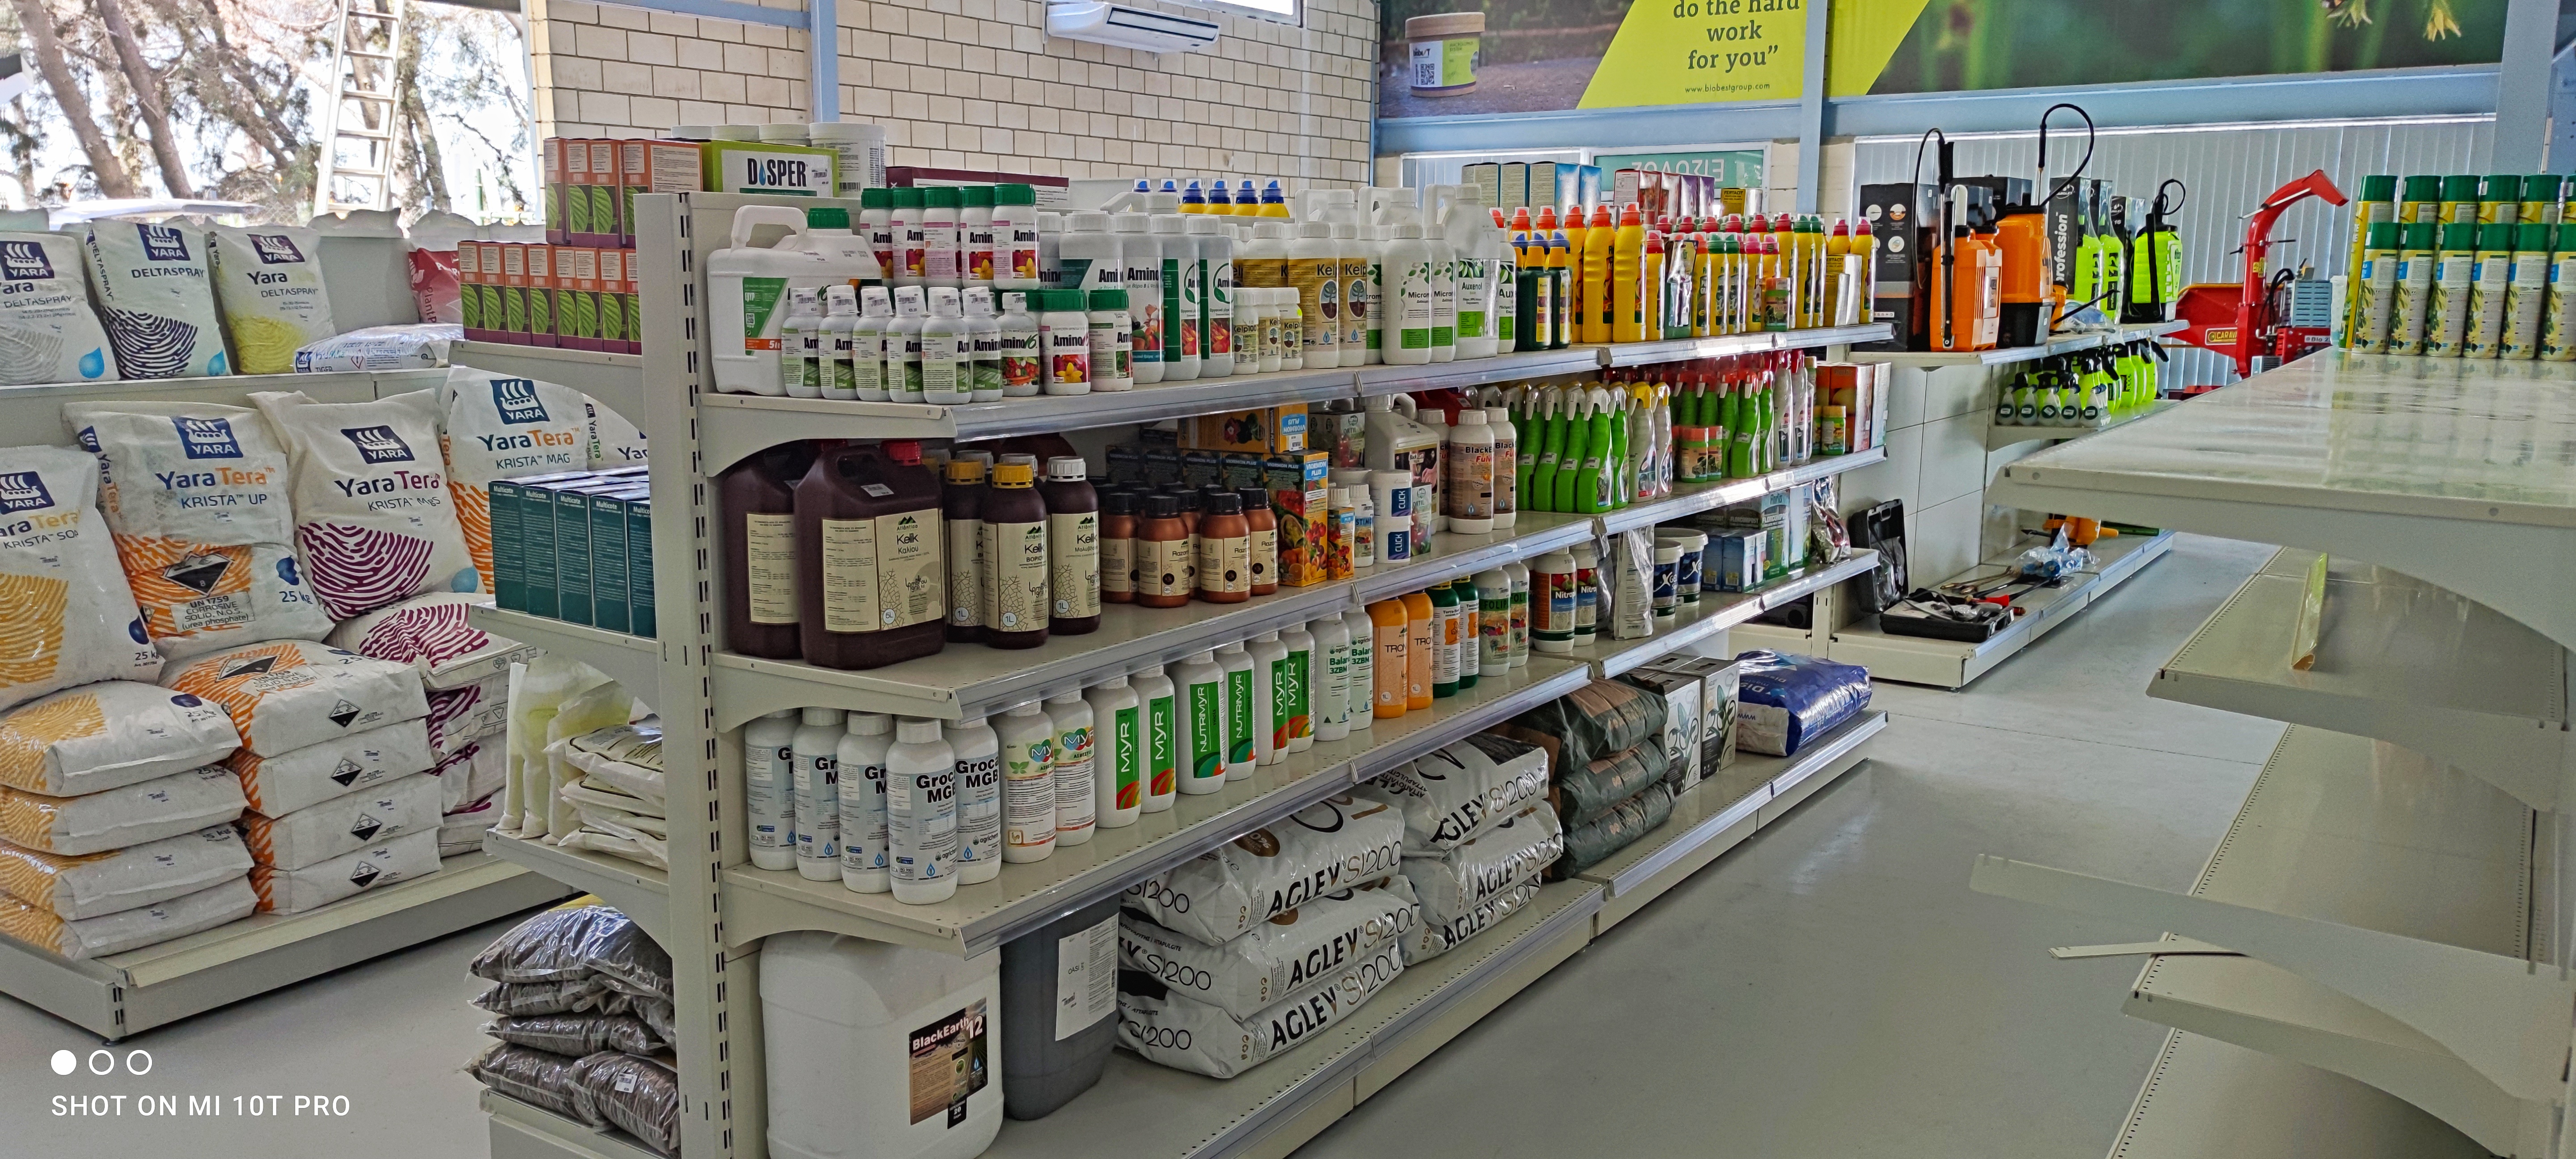 shop shelves, Cyprus